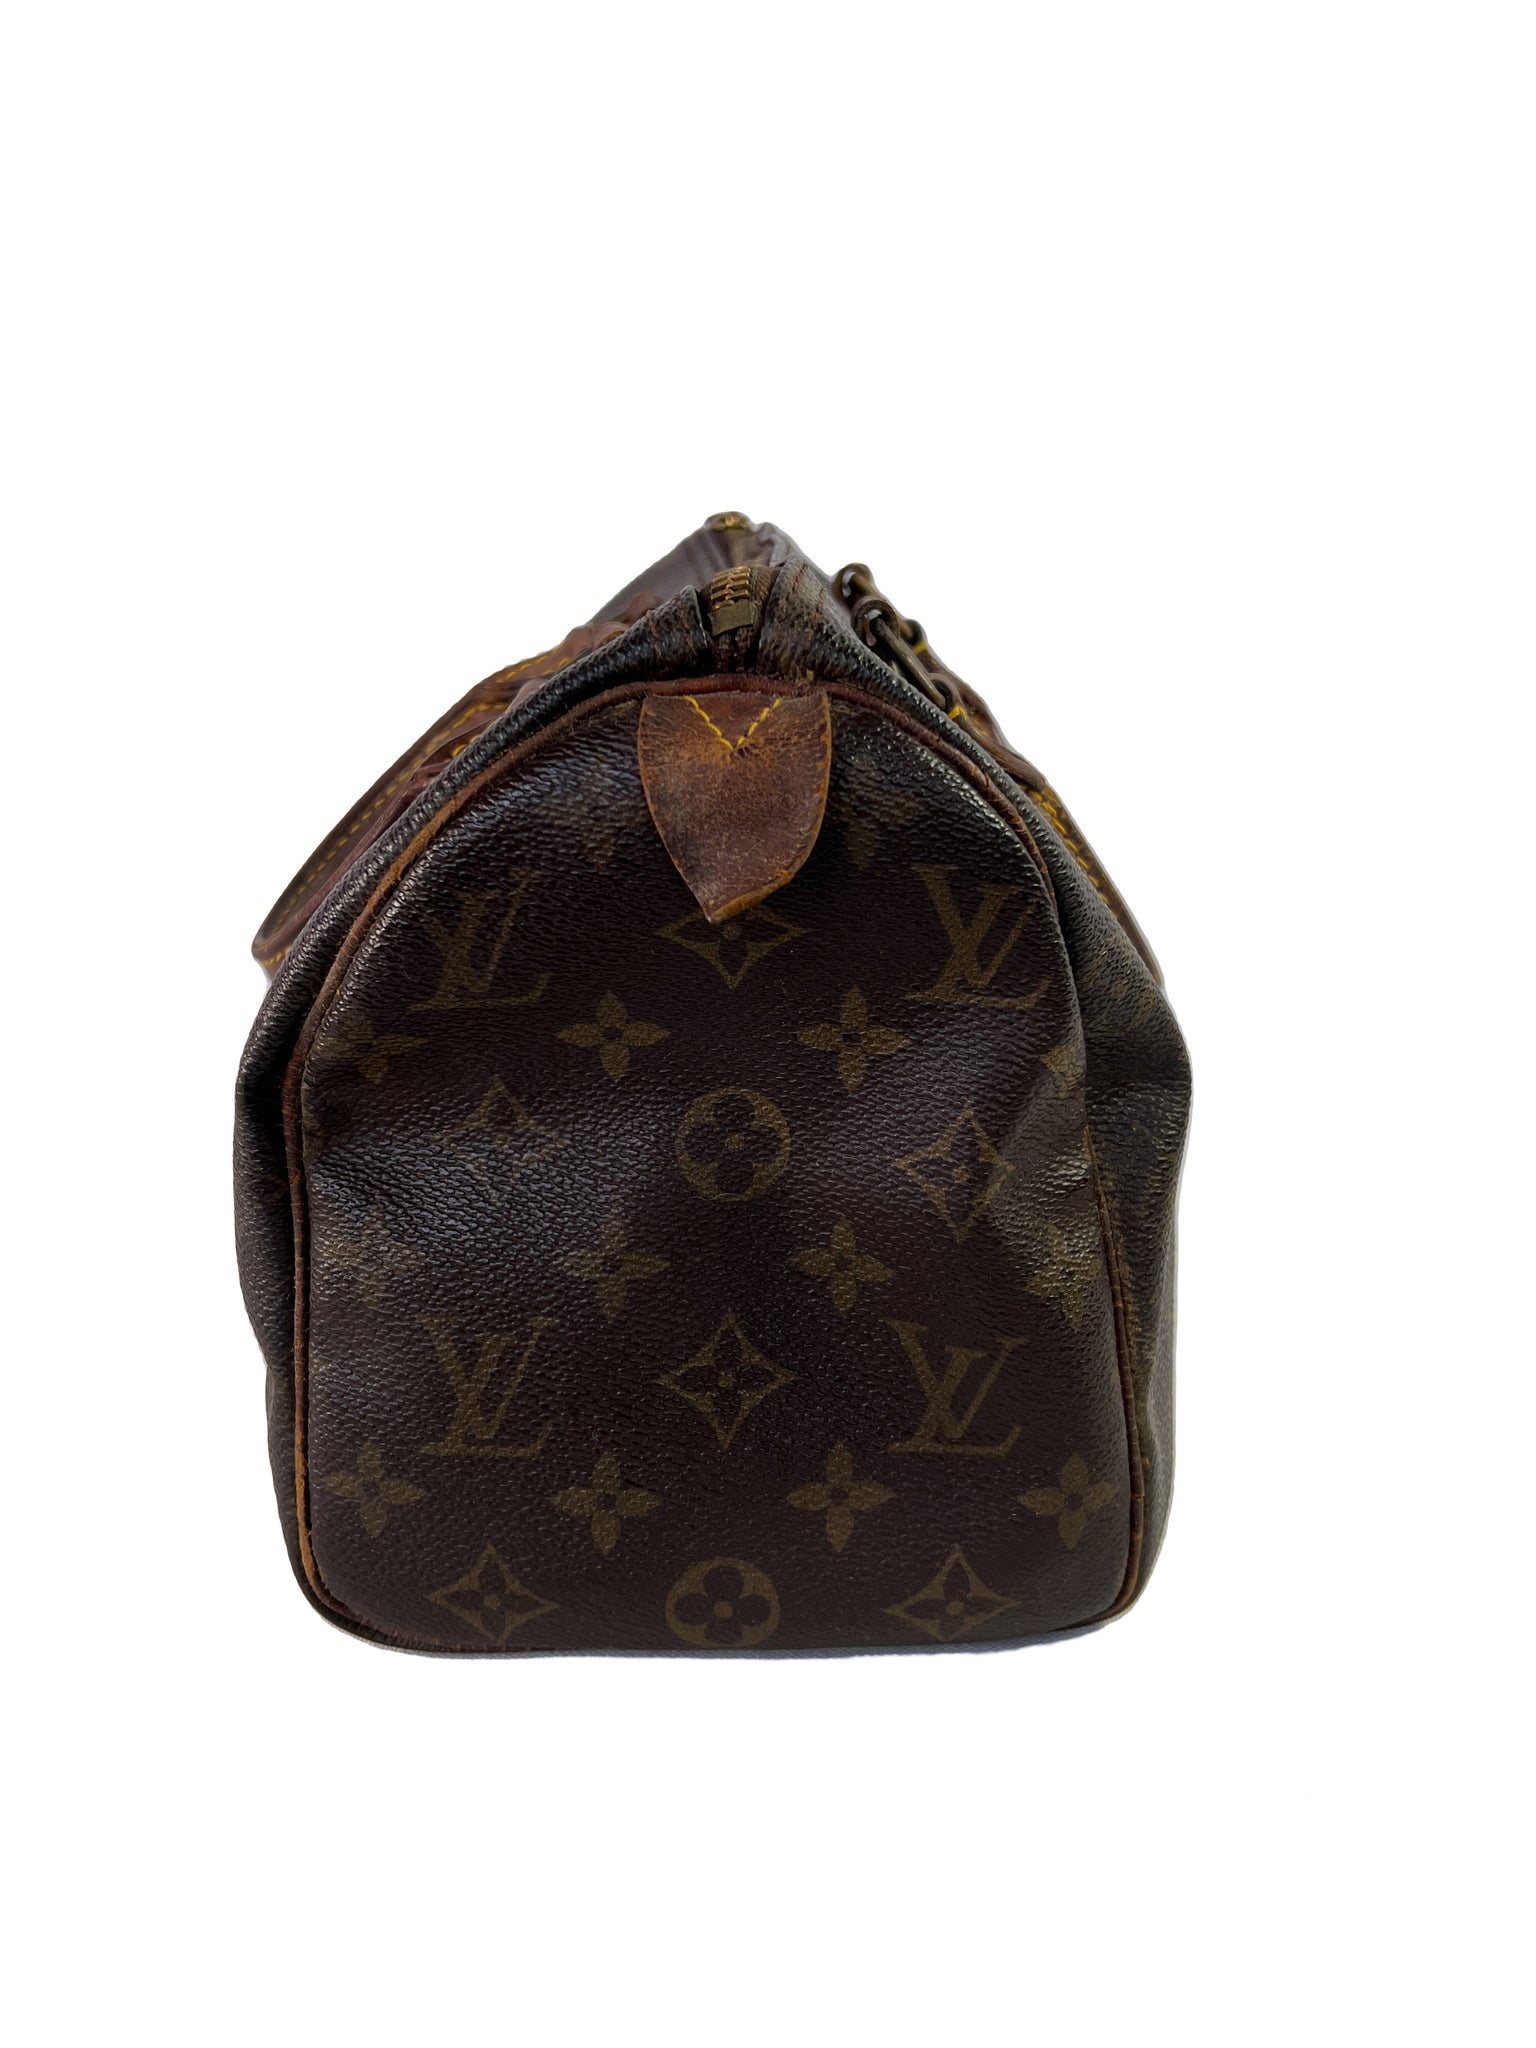 LOUIS VUITTON Speedy 25 Vintage Handbag in Classic Monogram 